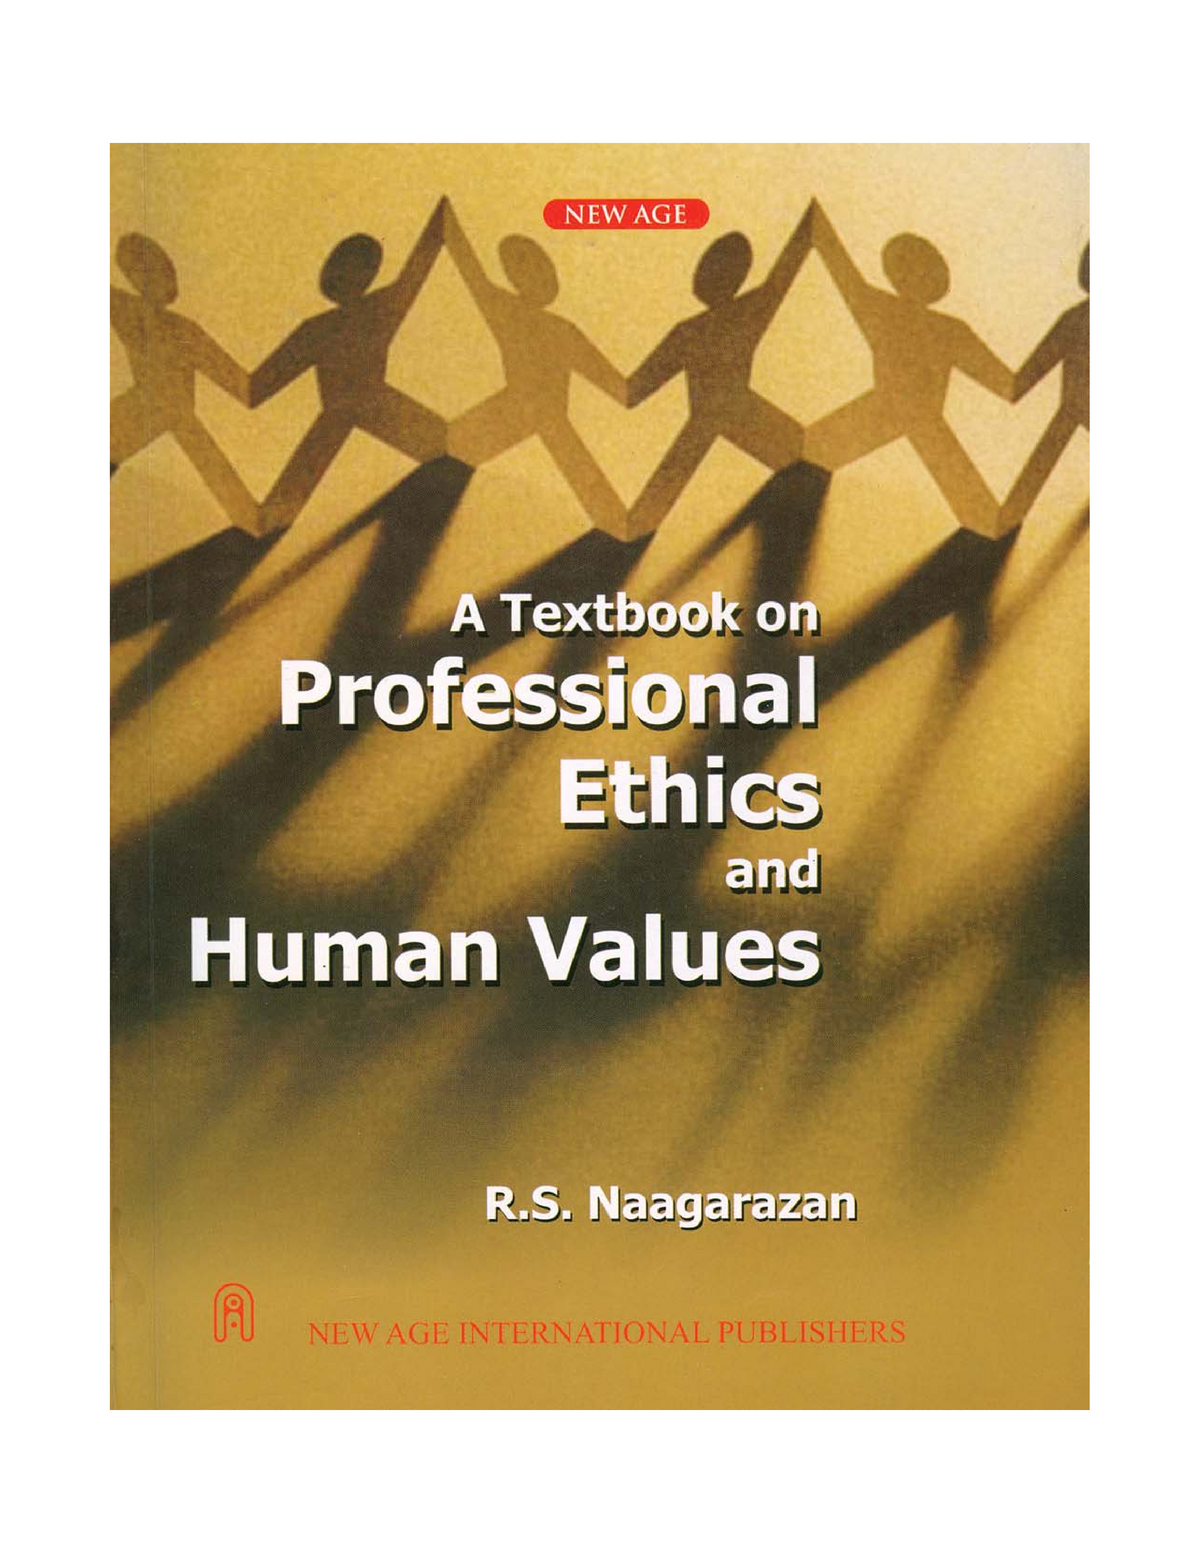 Human values. Textbook on professional Ethics. Professional Ethics.